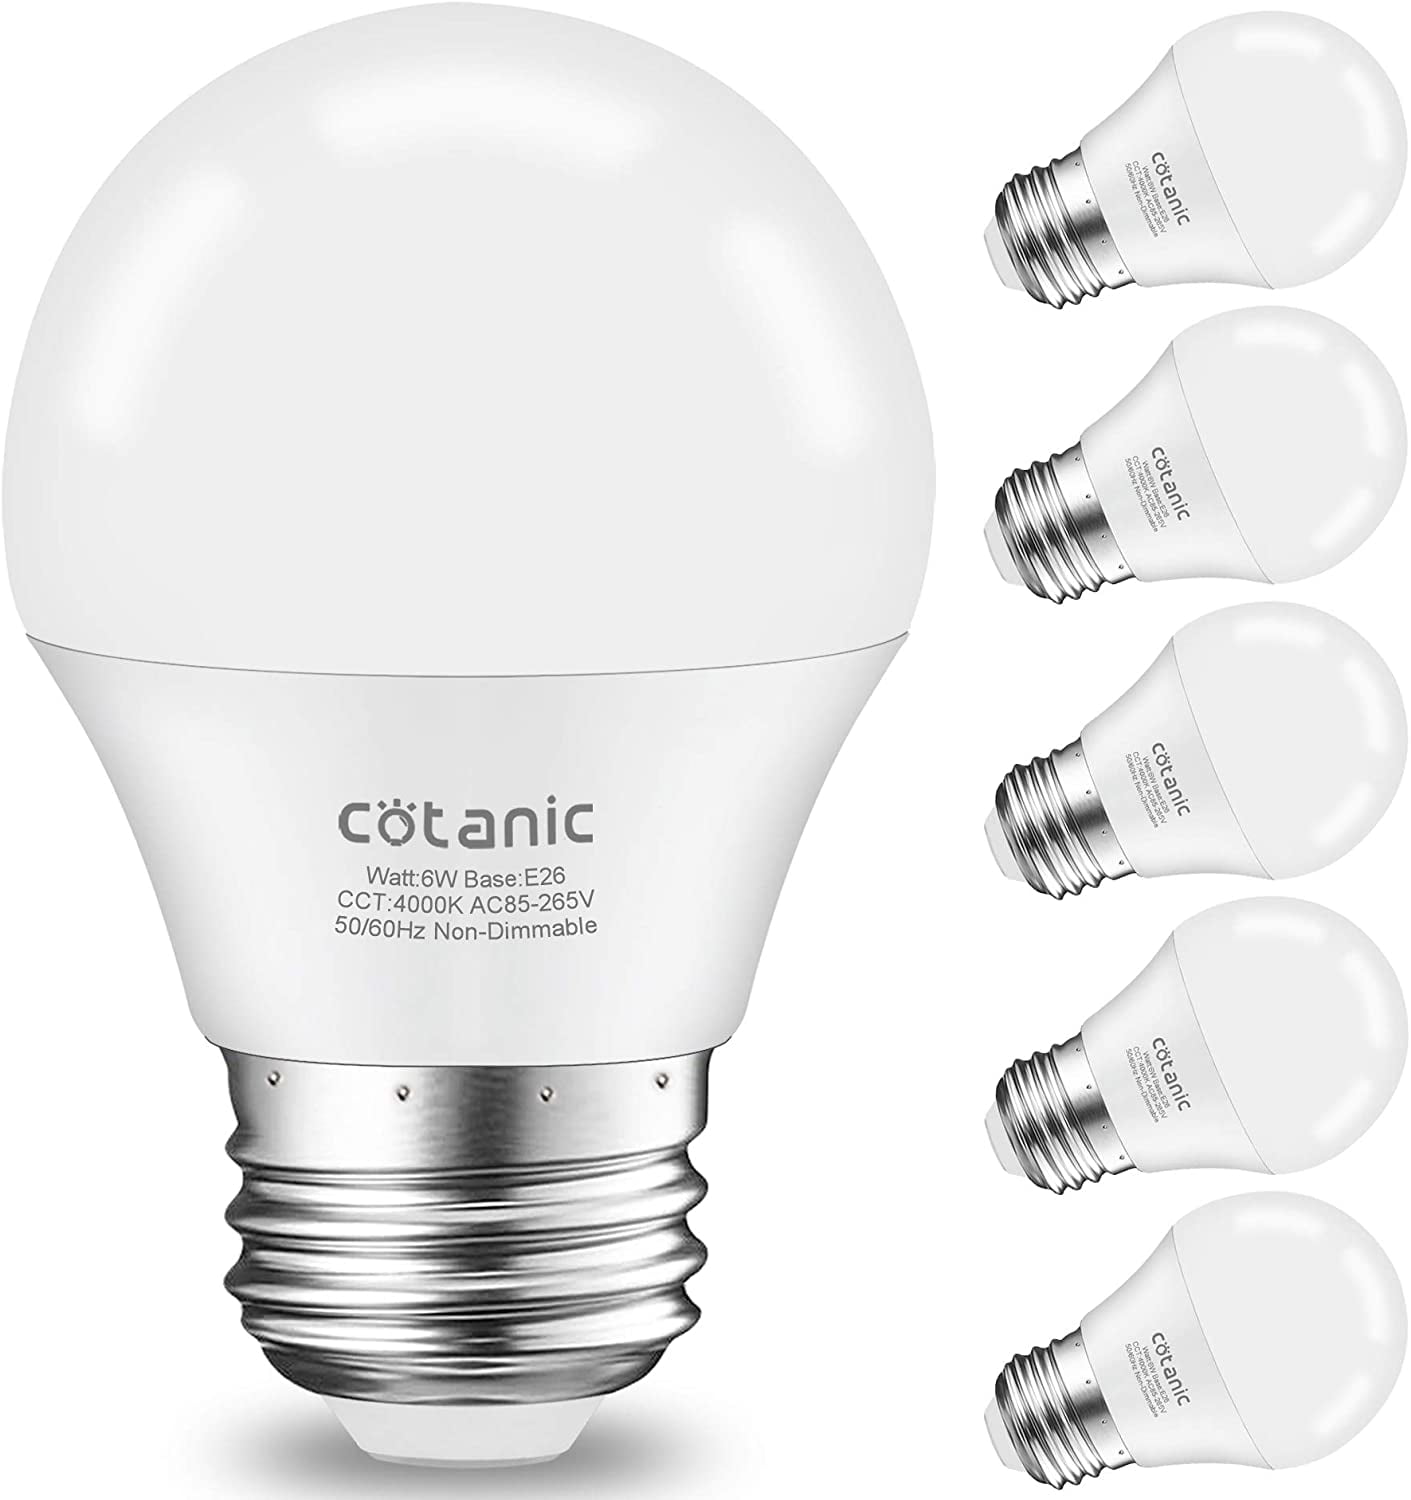 Soft Warm White 2700K 60 Watts Globe Light Bulb Equivalent Aooshine A15 LED Bulbs 6 Watts E26 Standard Screw Base 600 Lumens A15/G45 Shape Decorative Edison Home Lighting Non-Dimmable Pack of 6 